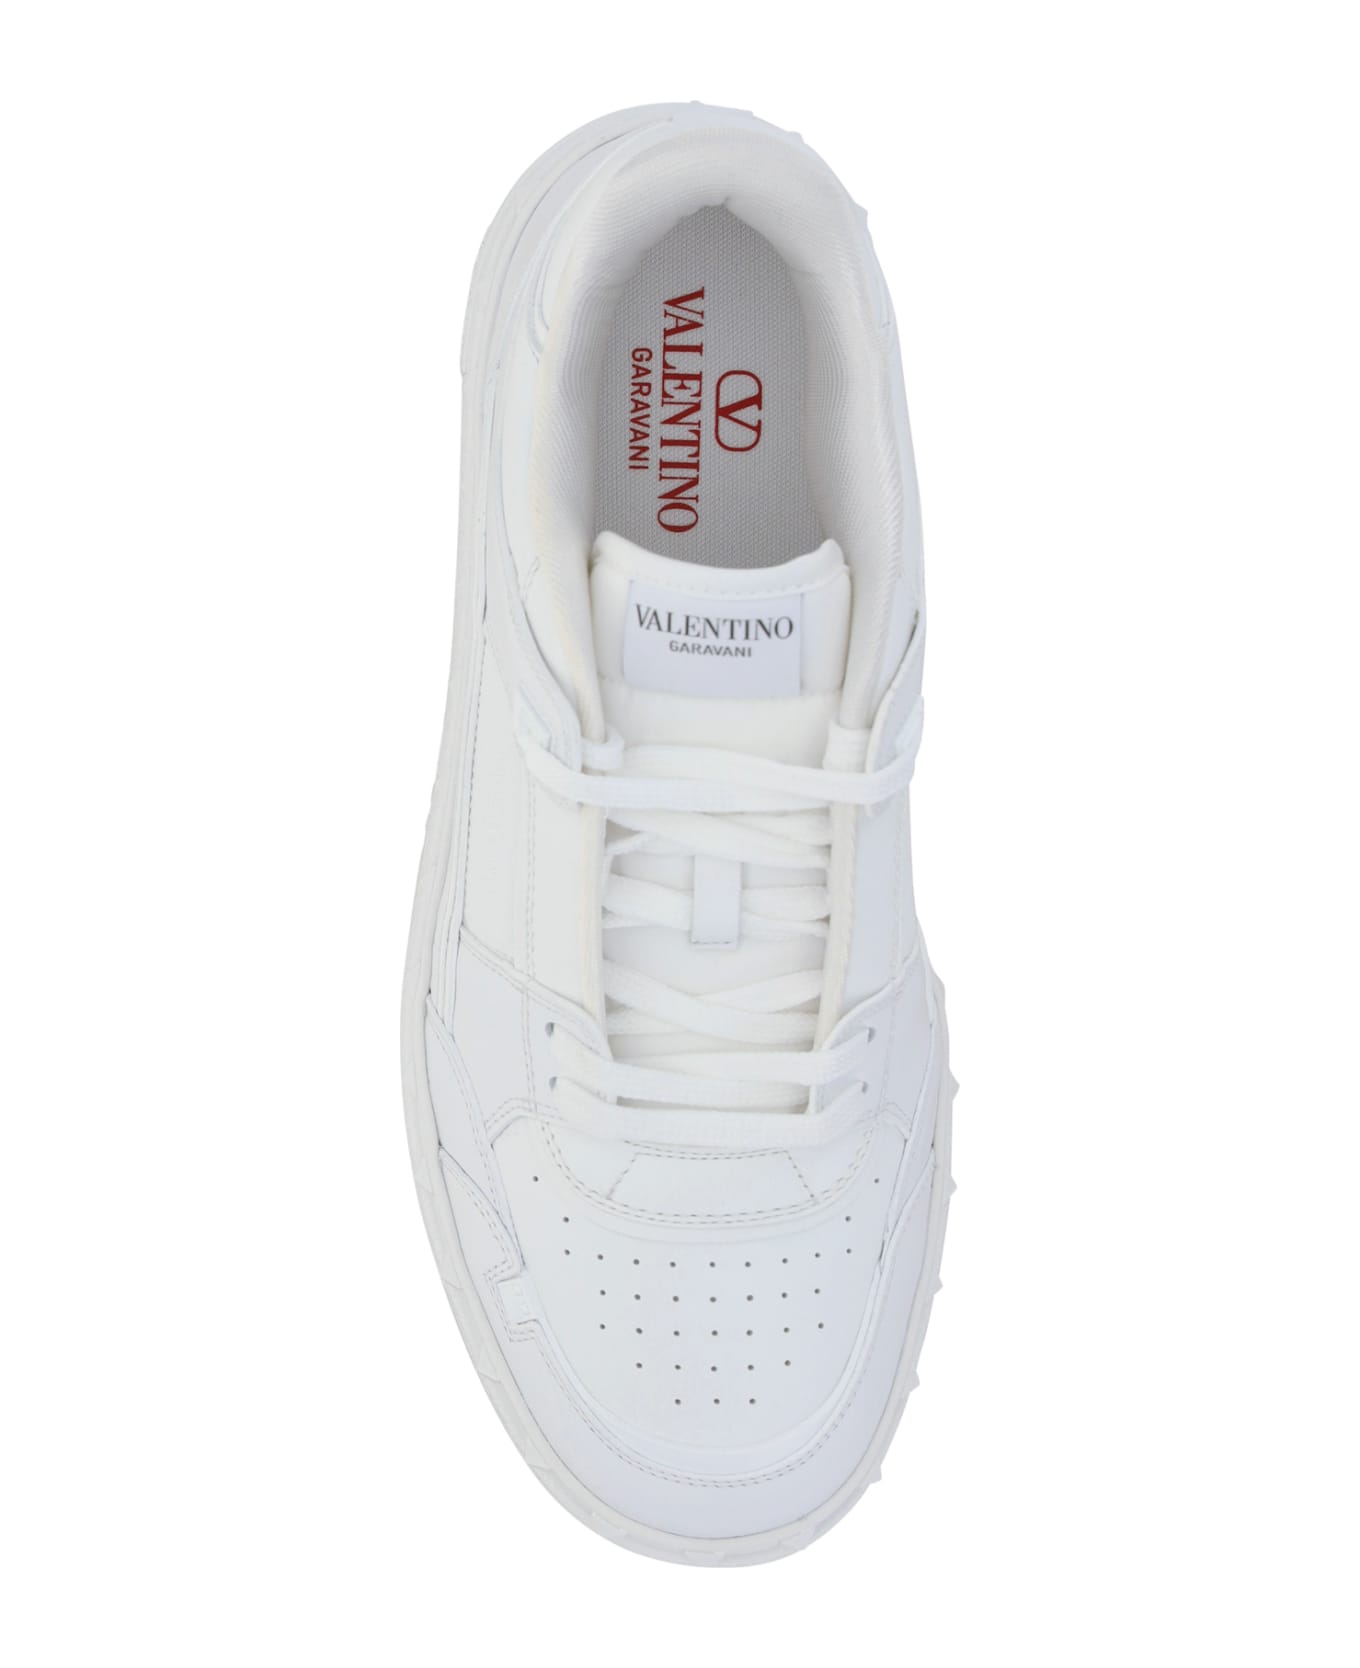 Valentino Garavani - Freedots Leather Low-top Sneakers - White スニーカー